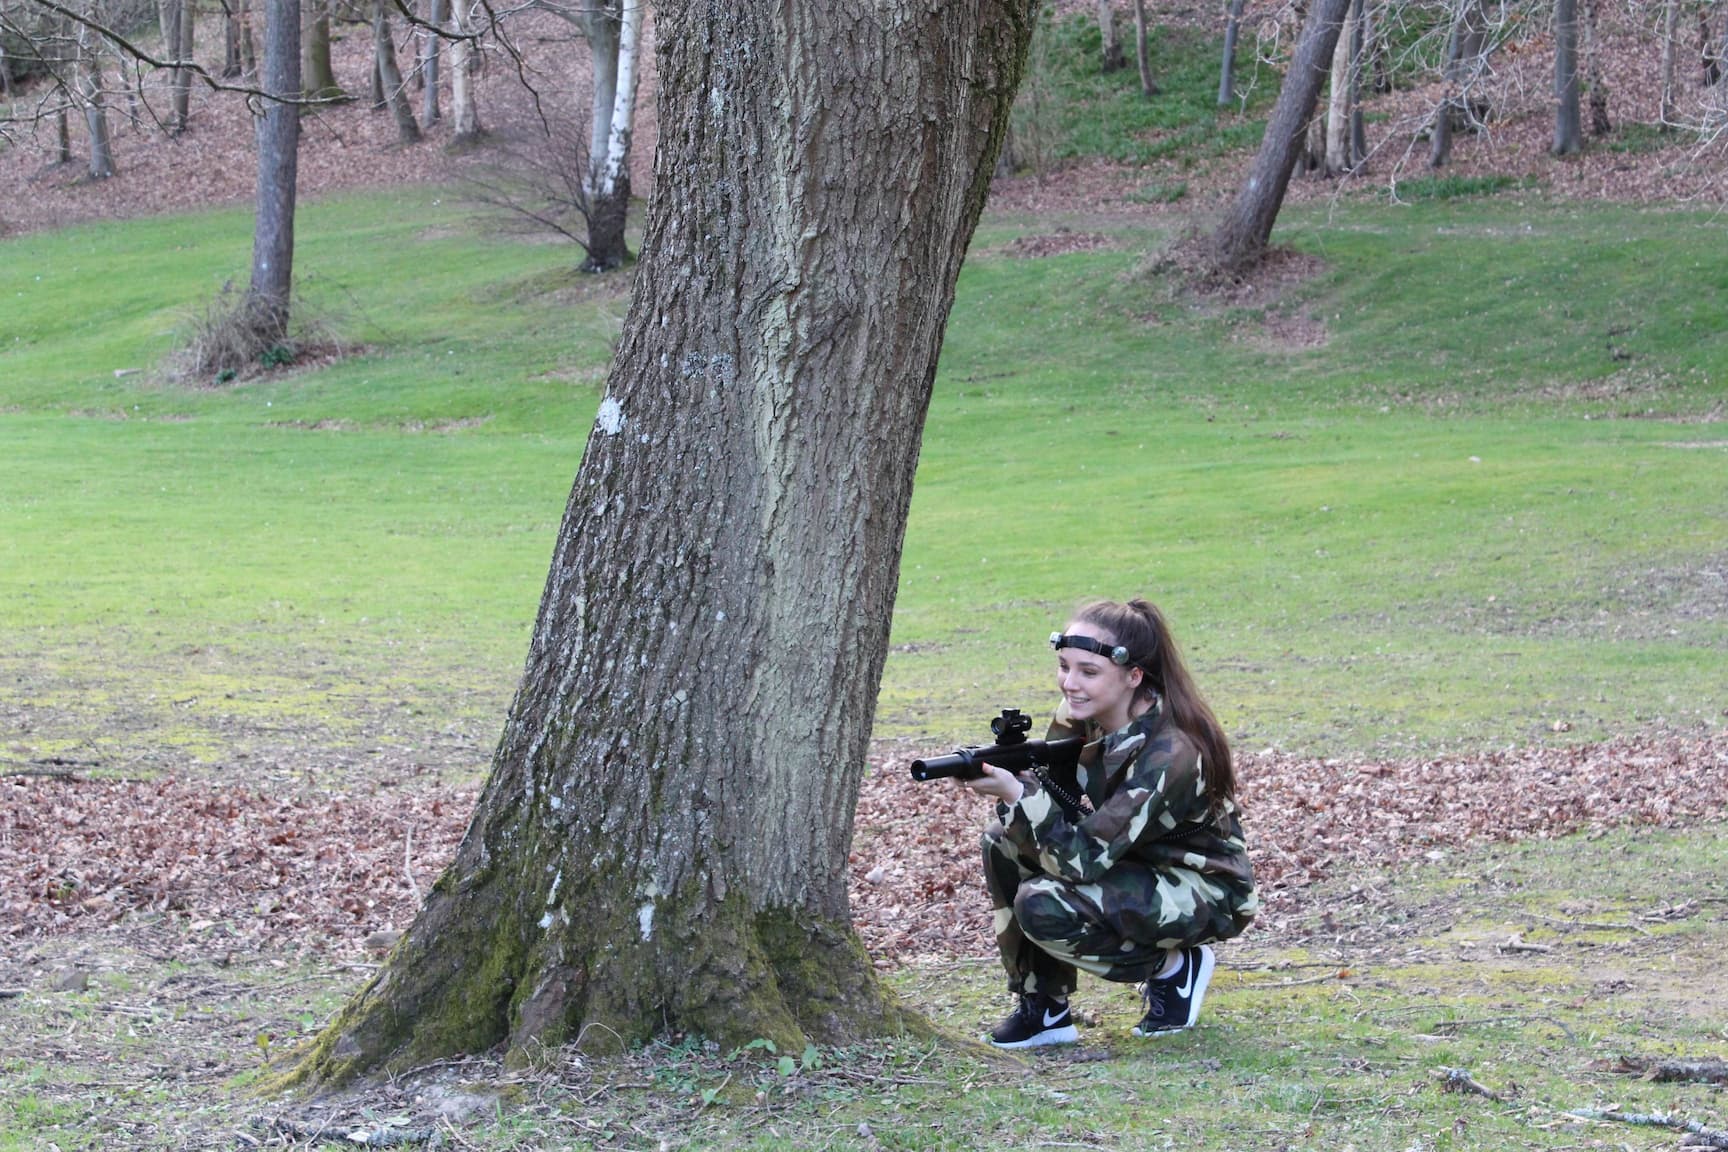 Laser Tag Participant hiding behind a tree